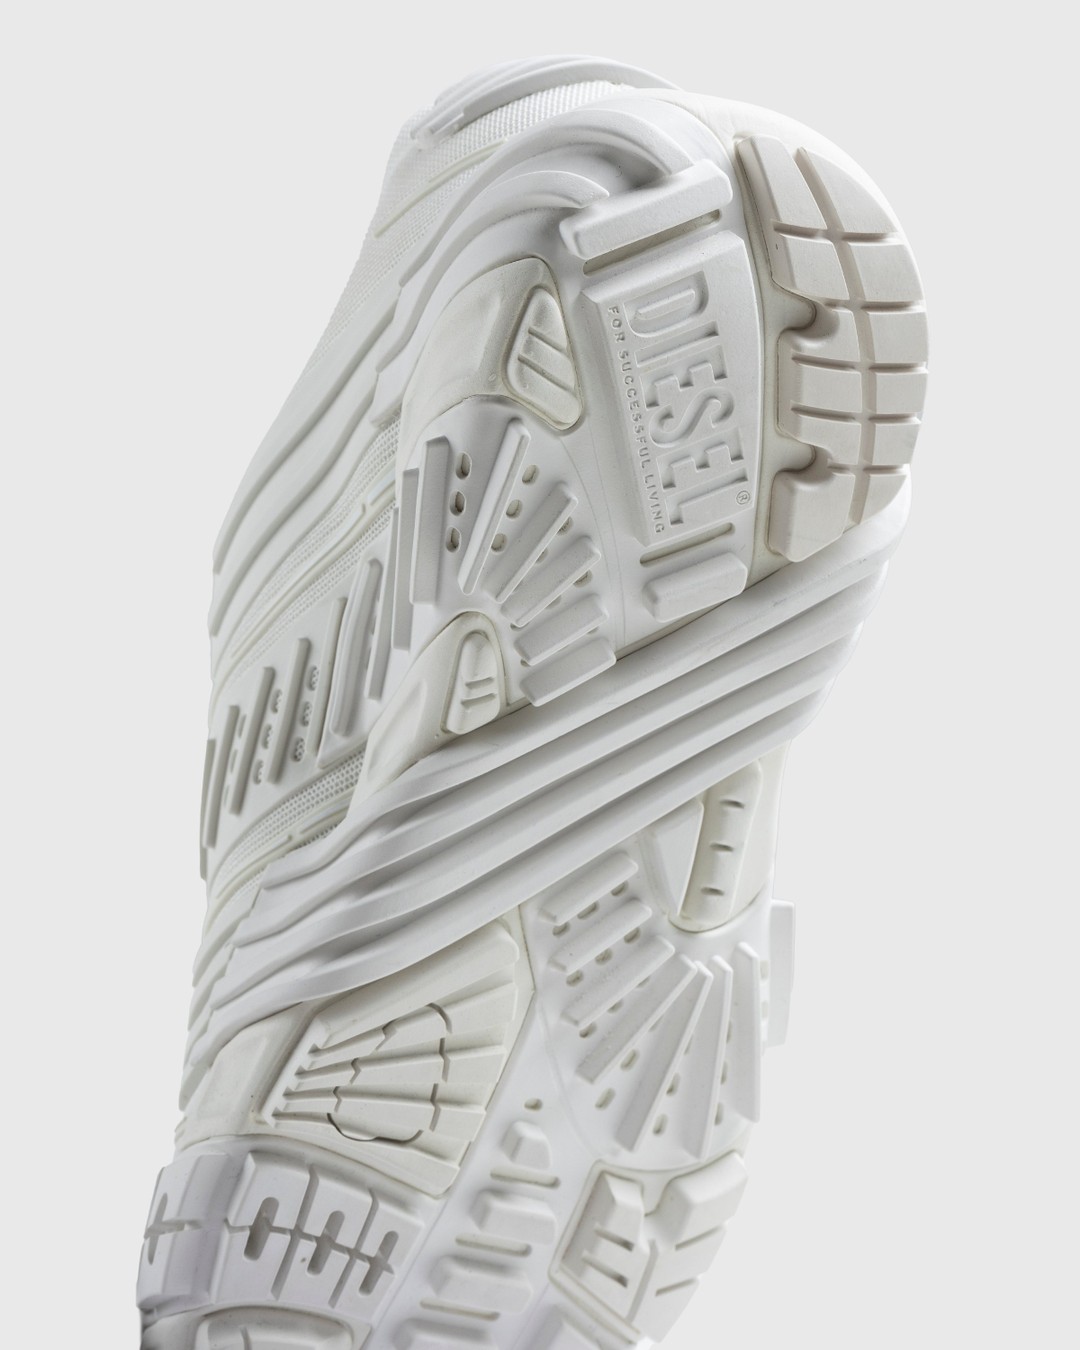 Diesel – S-Prototype Low Sneakers White | Highsnobiety Shop